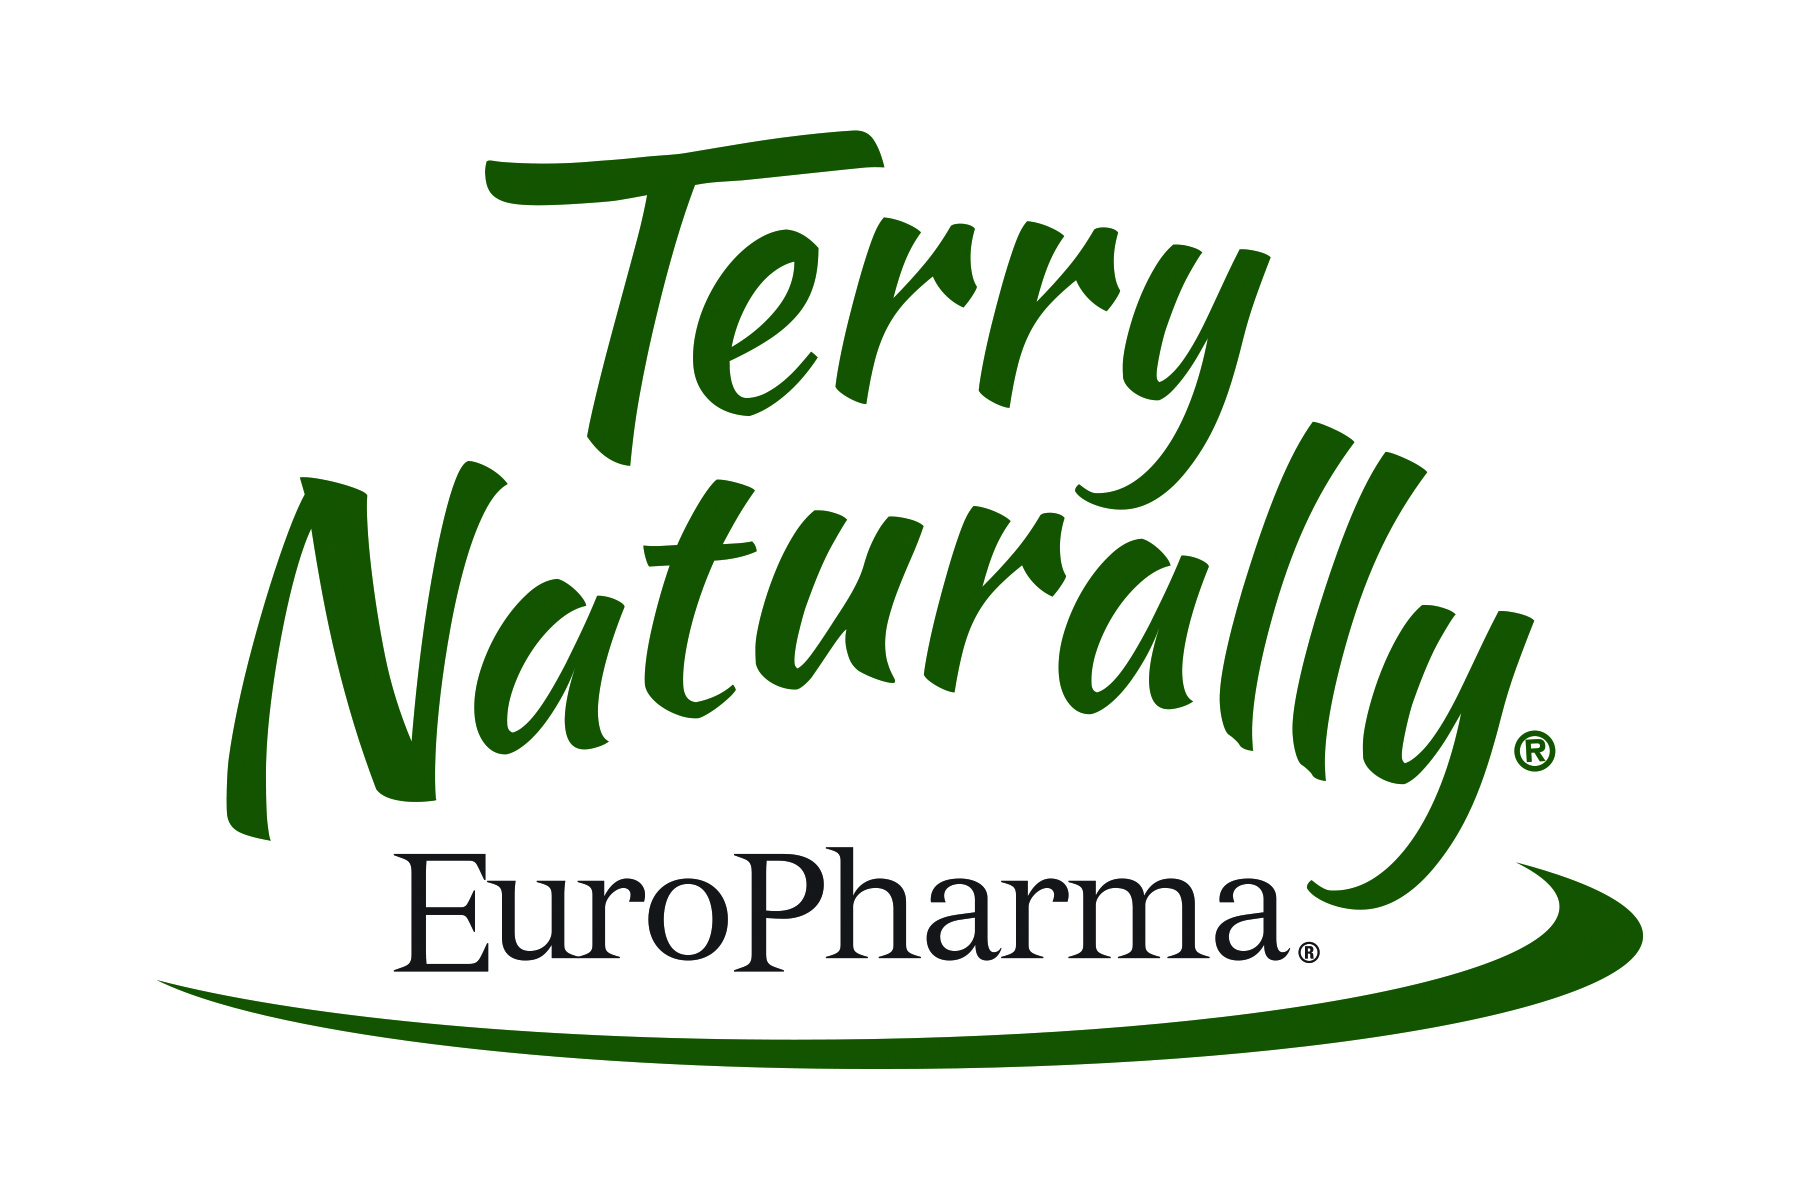 EuroPharma logo 2019